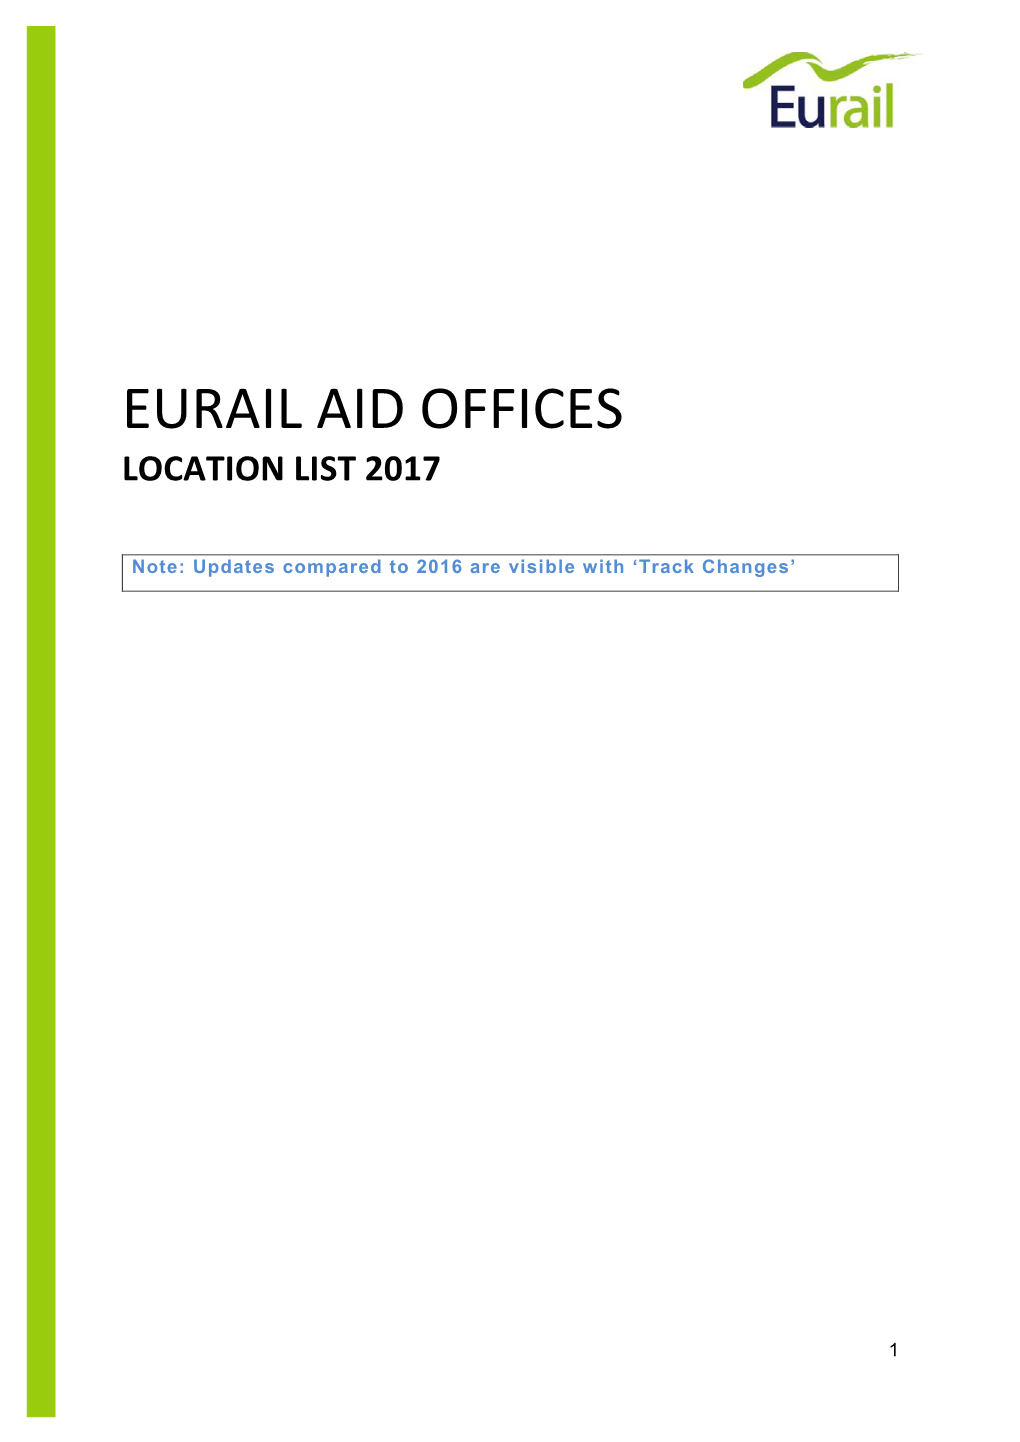 Eurail Aid Offices Location List 2017